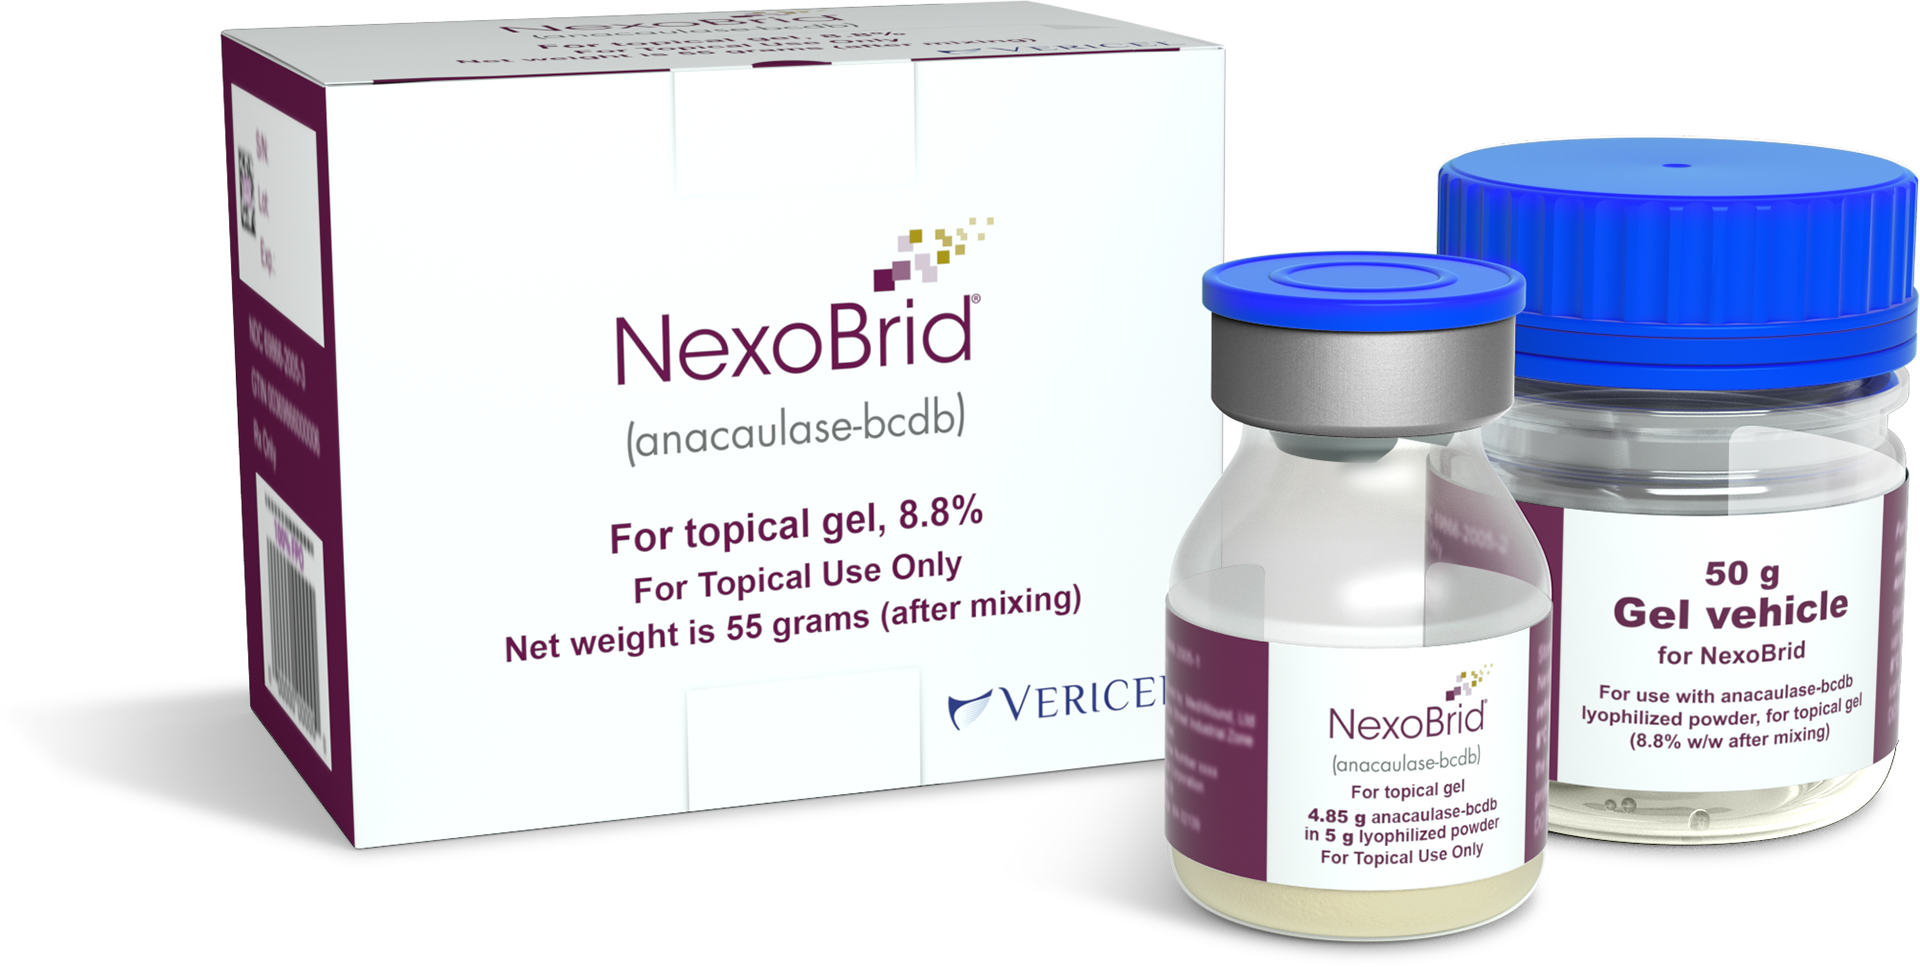 NexoBrid products